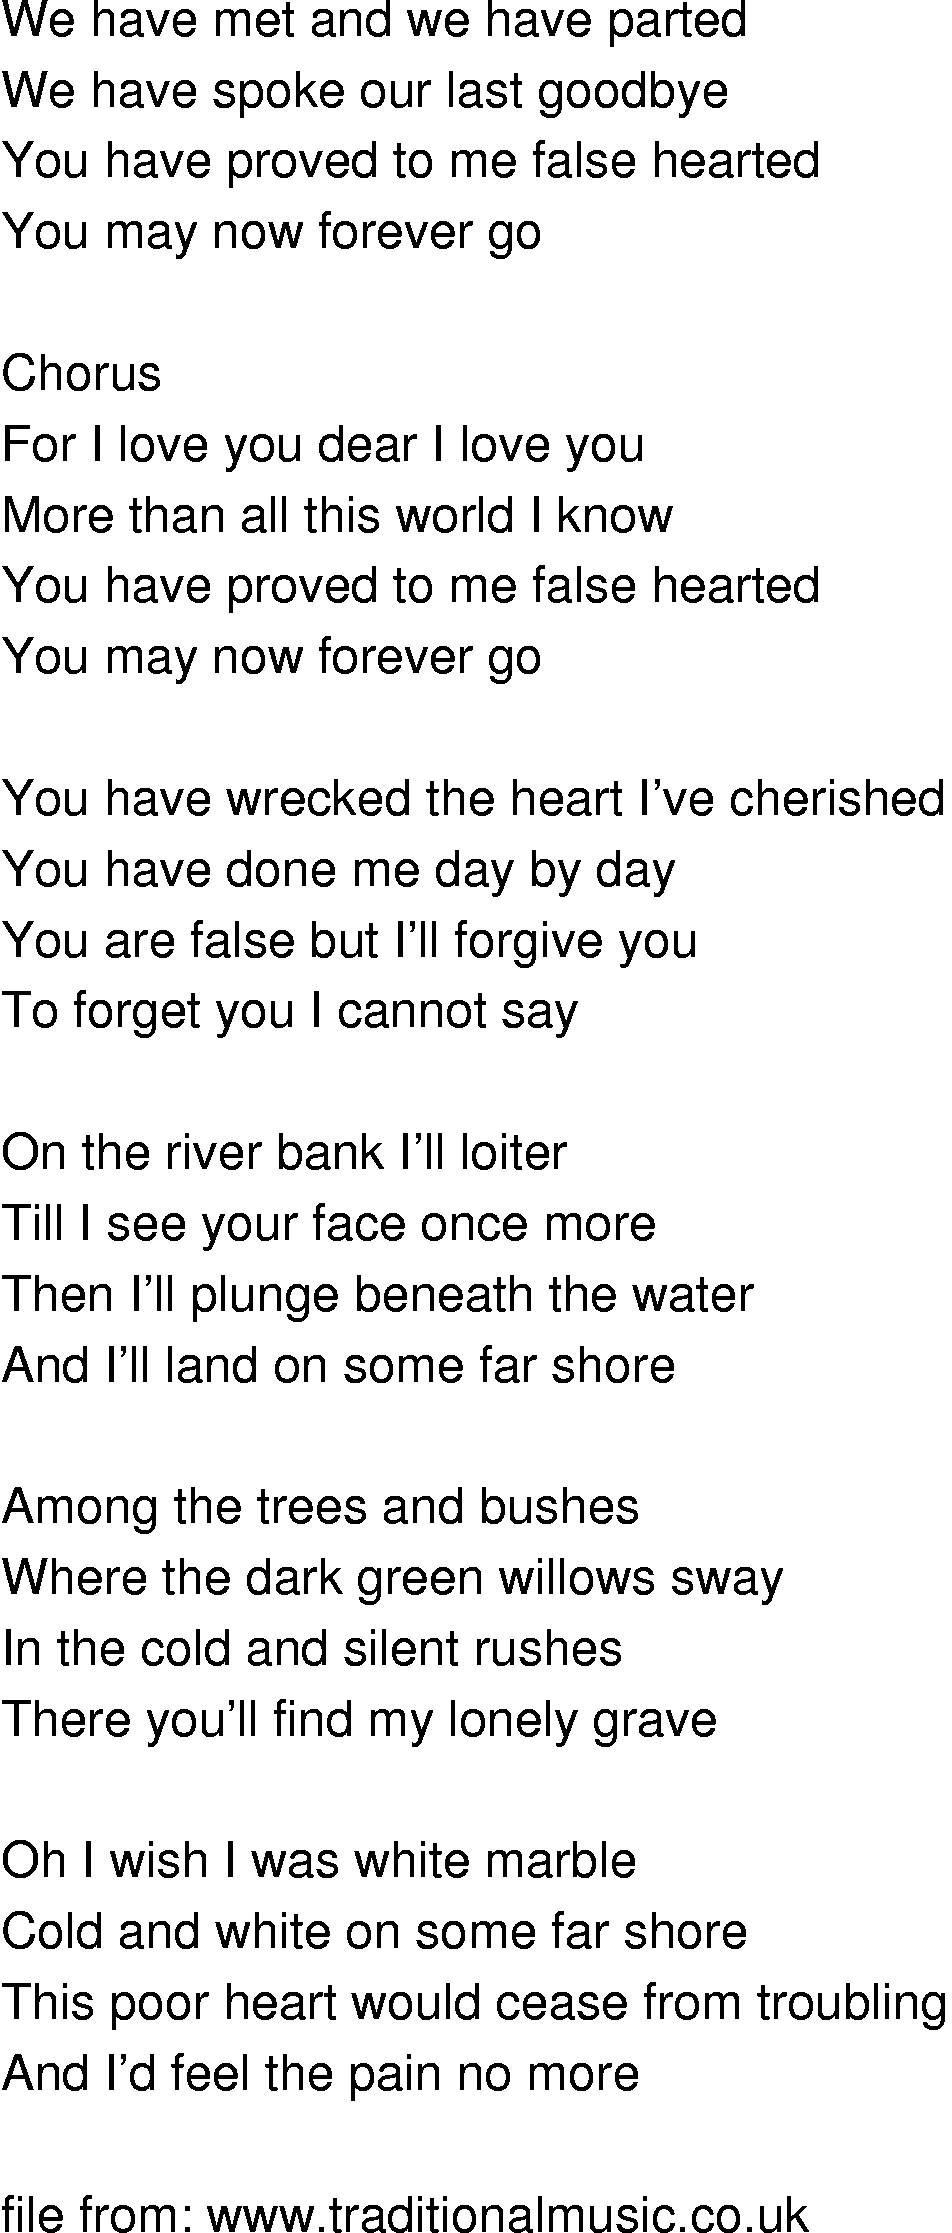 Old-Time (oldtimey) Song Lyrics - lovers farewell